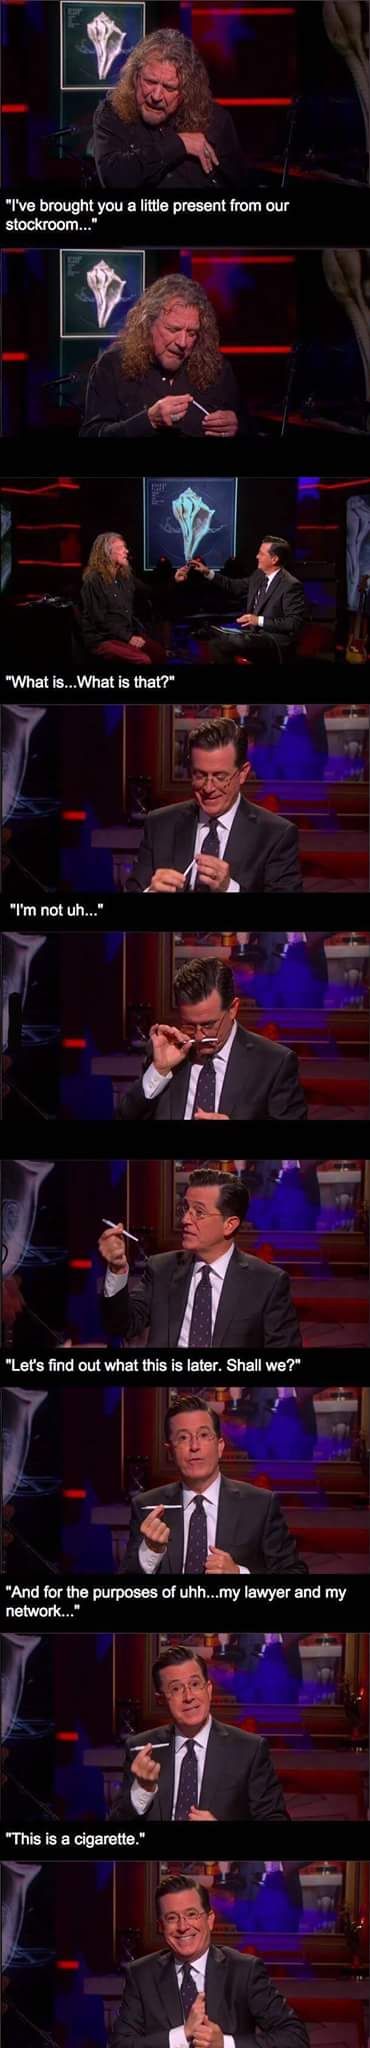 Colbert is the best